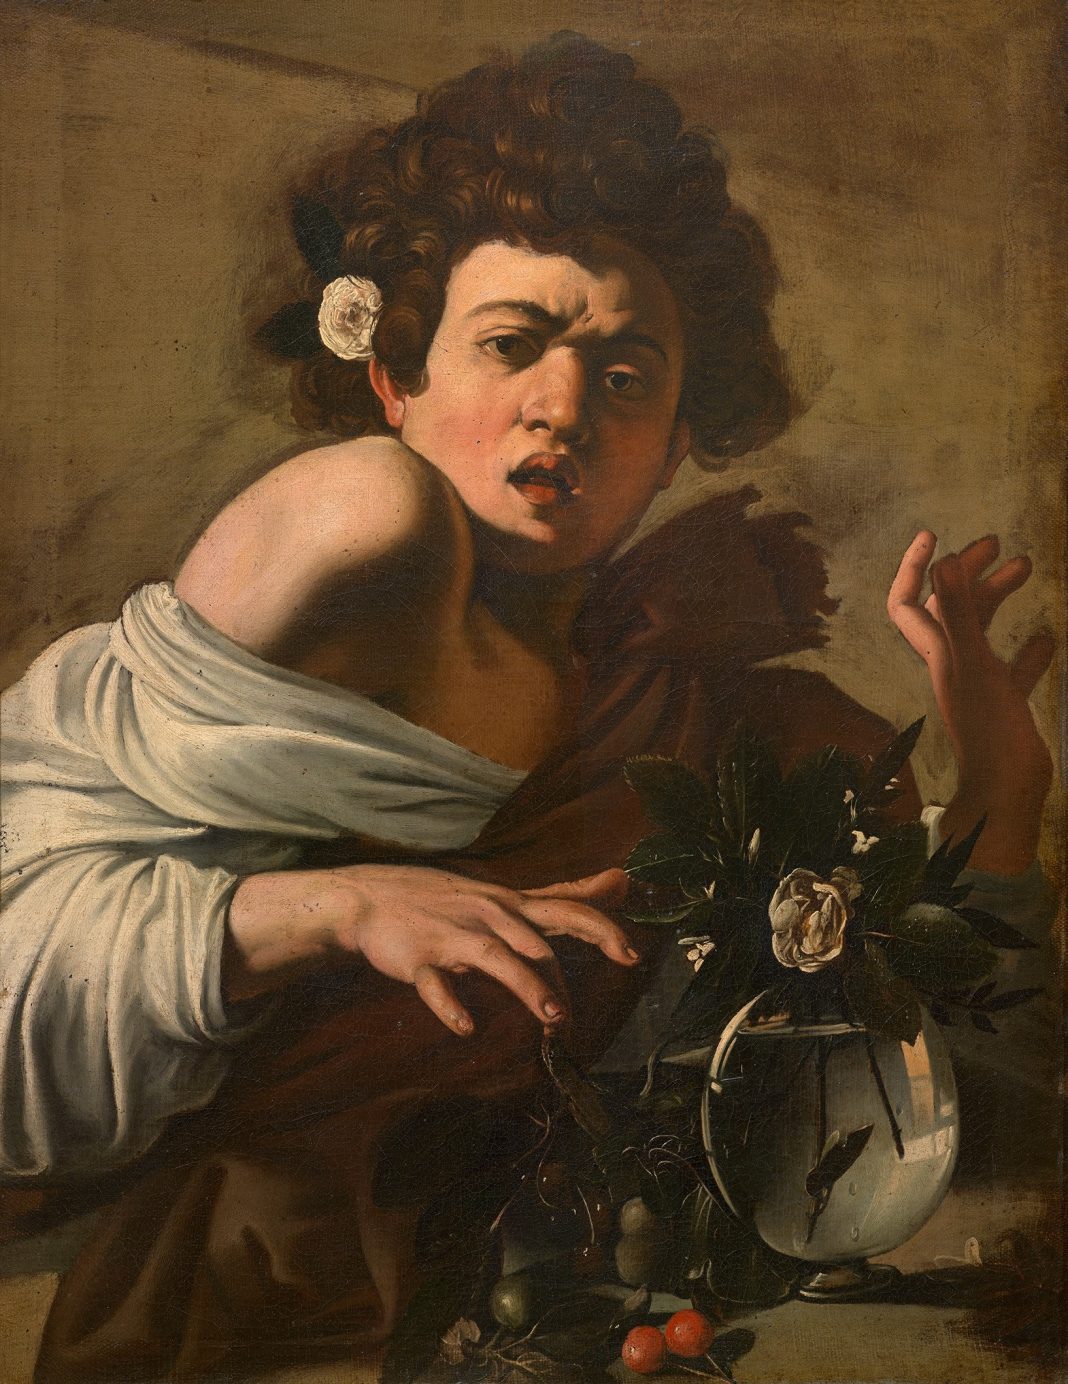 Caravaggio & Berninihttps://www.exibart.com/repository/media/2019/09/unnamed-2-1-1068x1384.jpg